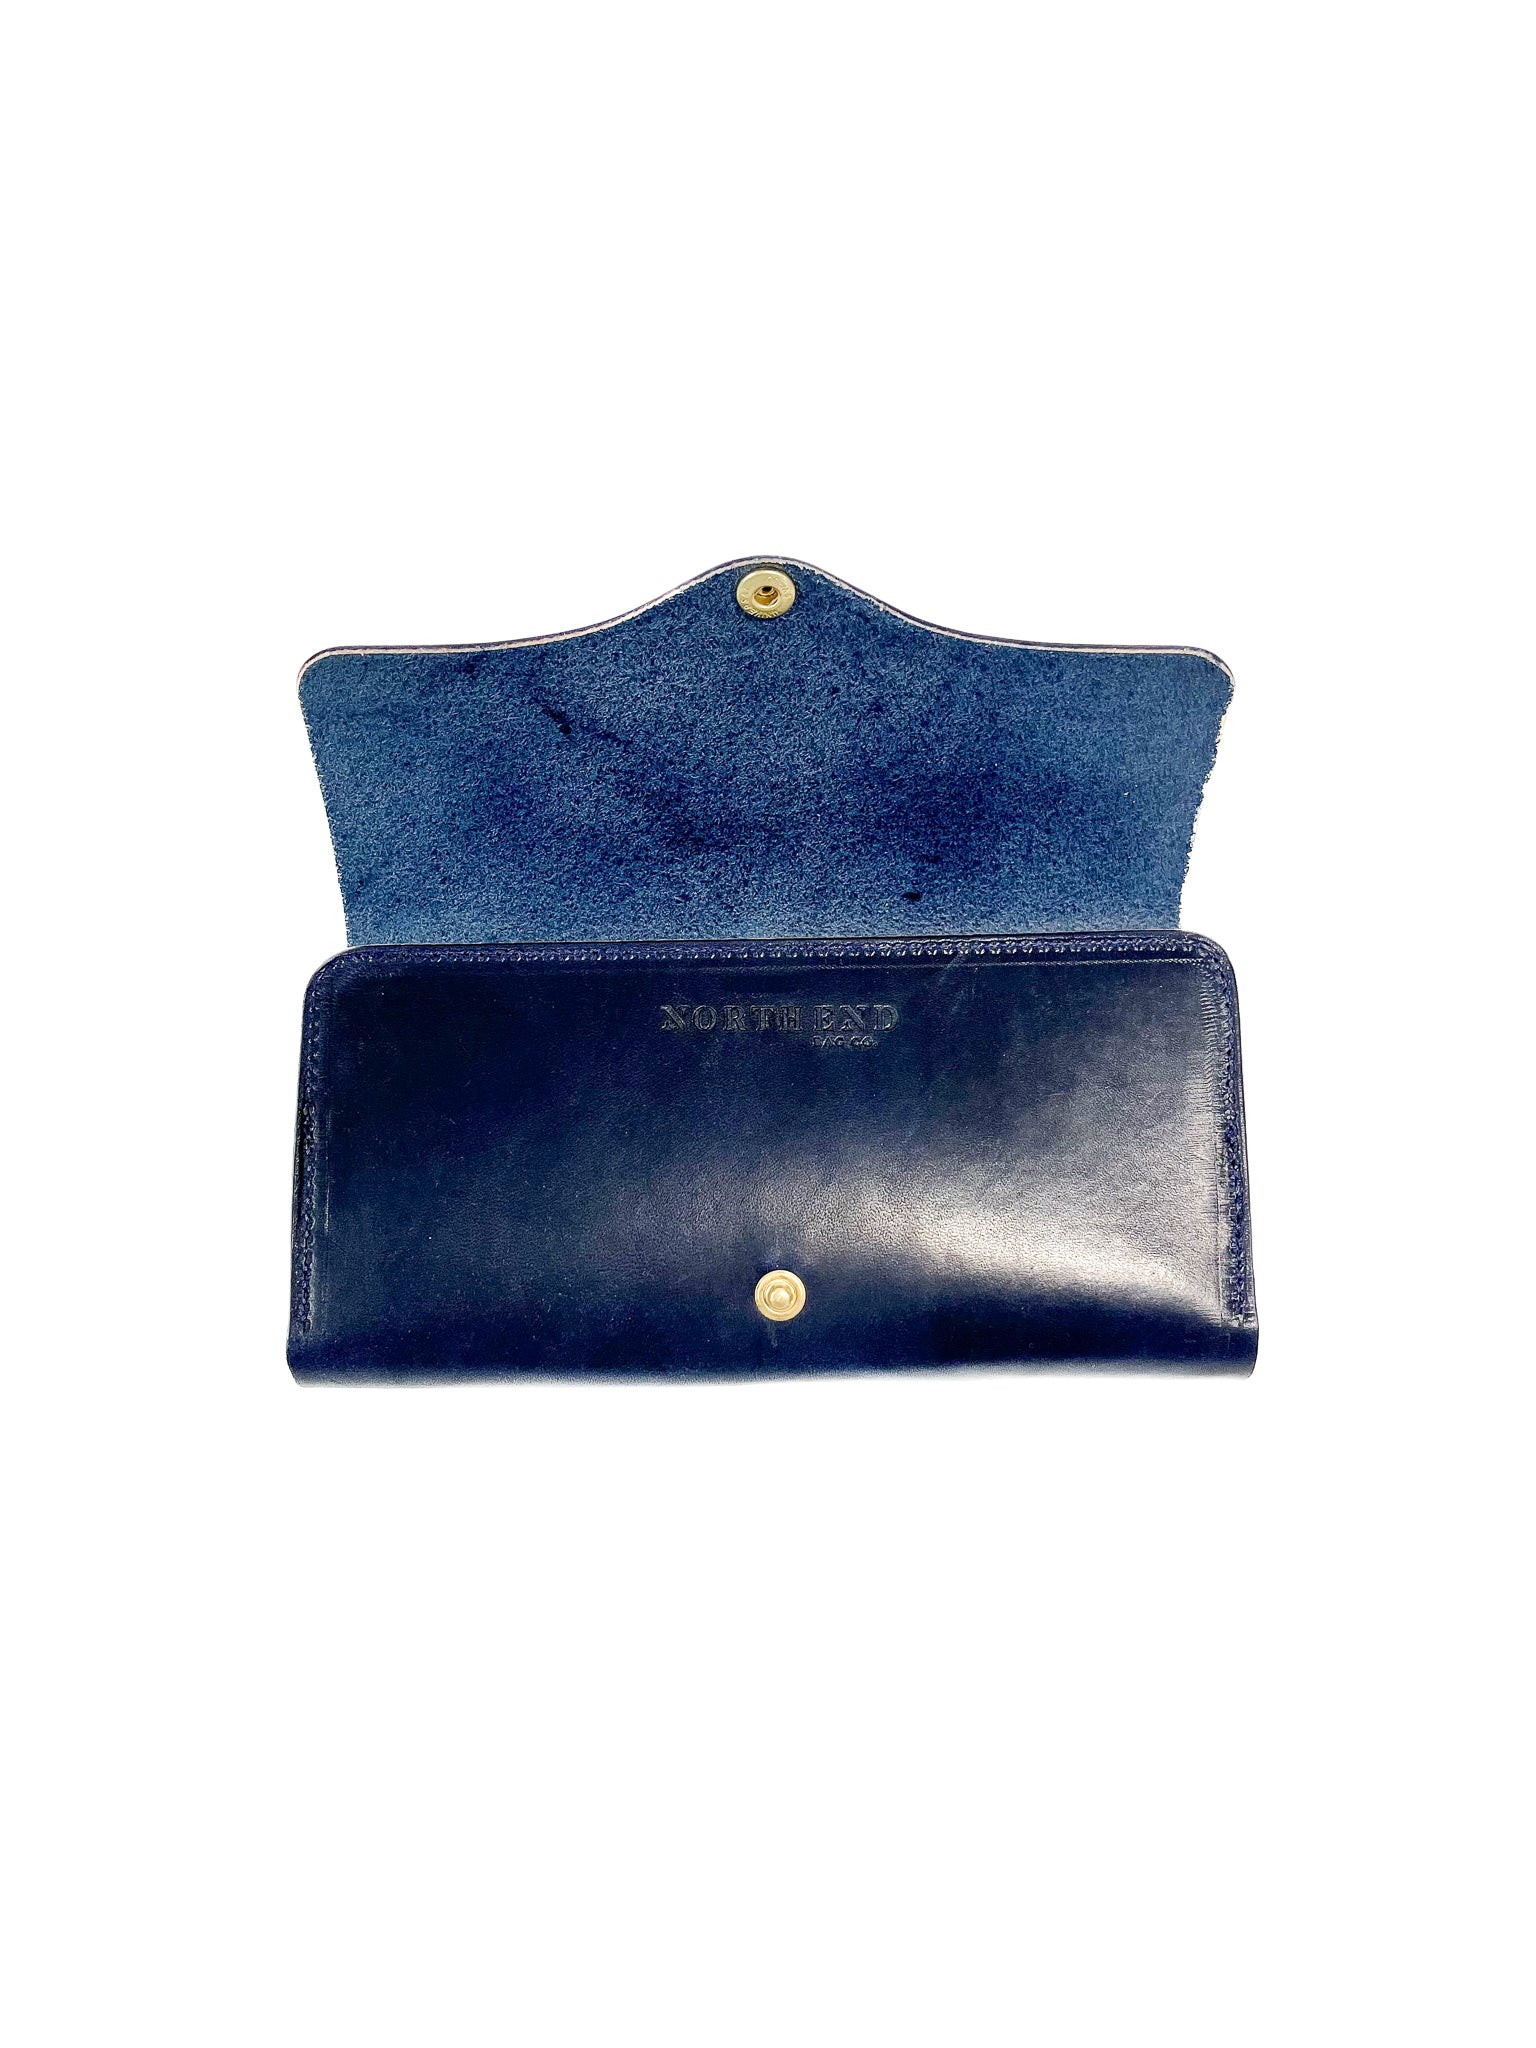 New Women's Wallet Women's Medium Long Fashion Wallet Clutch Bag